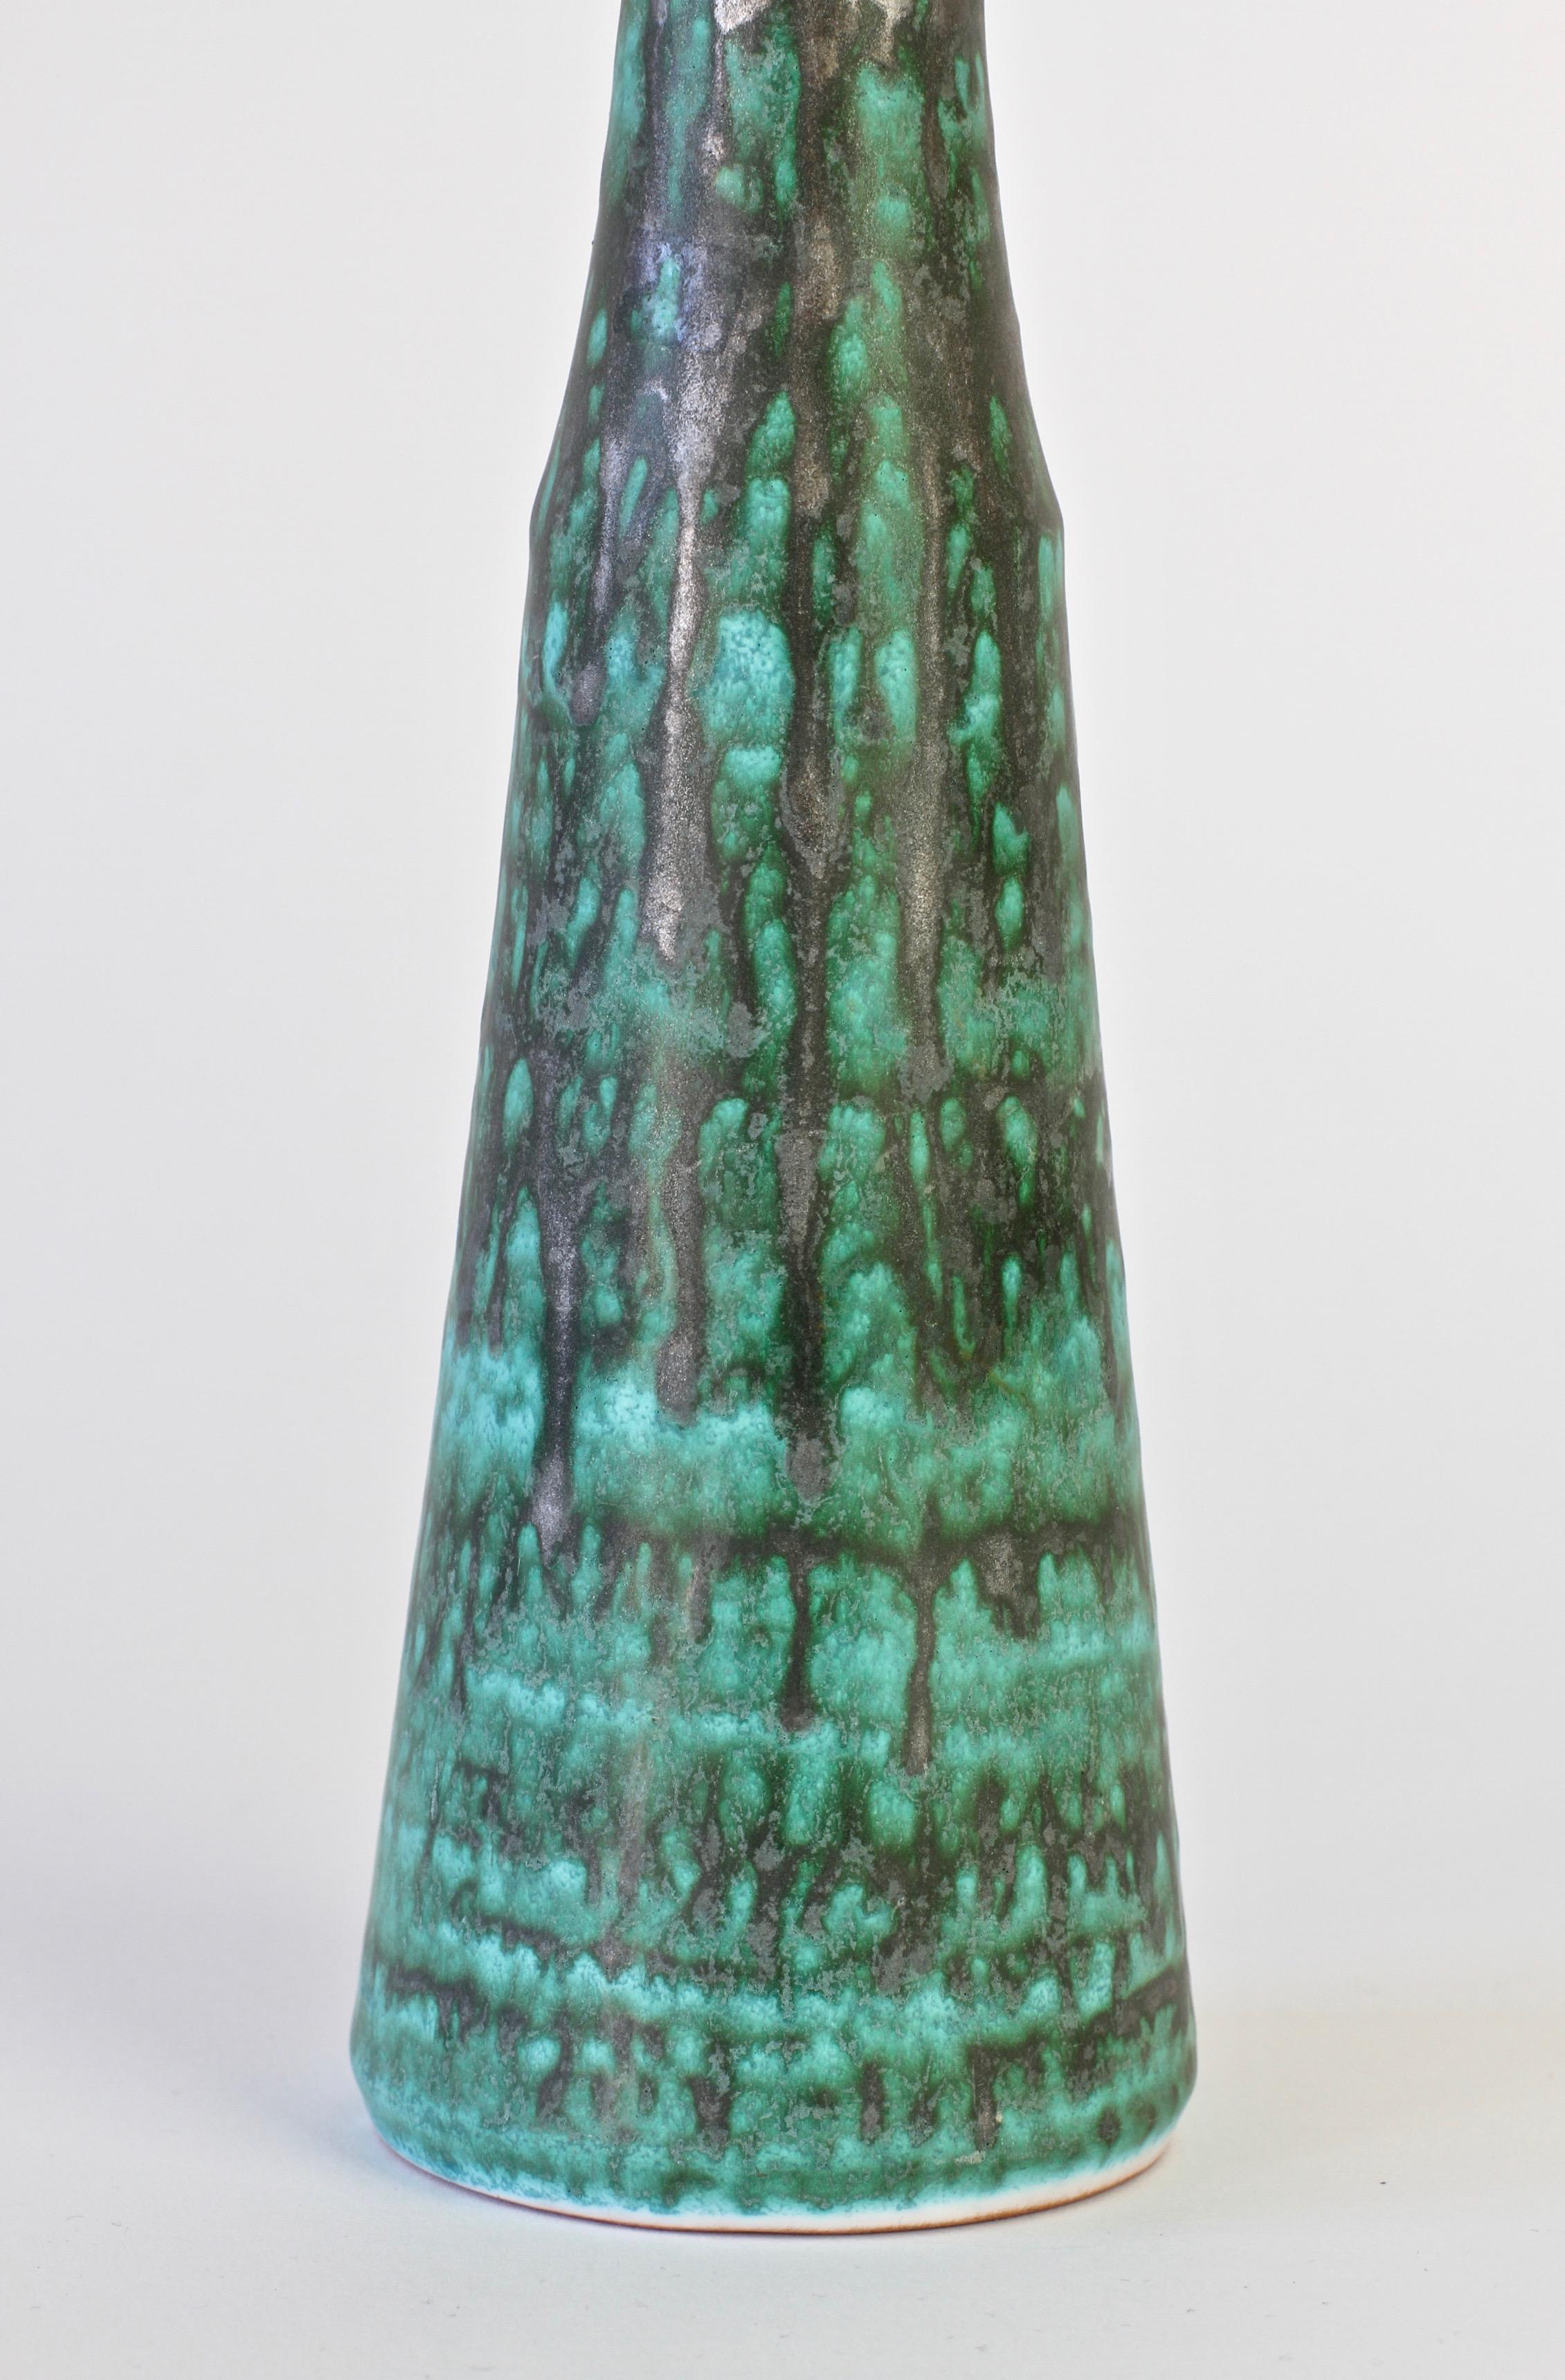 Ceramic Vintage Midcentury Green and Graphite Glazed Vase by Waechtersbach, 1950s For Sale